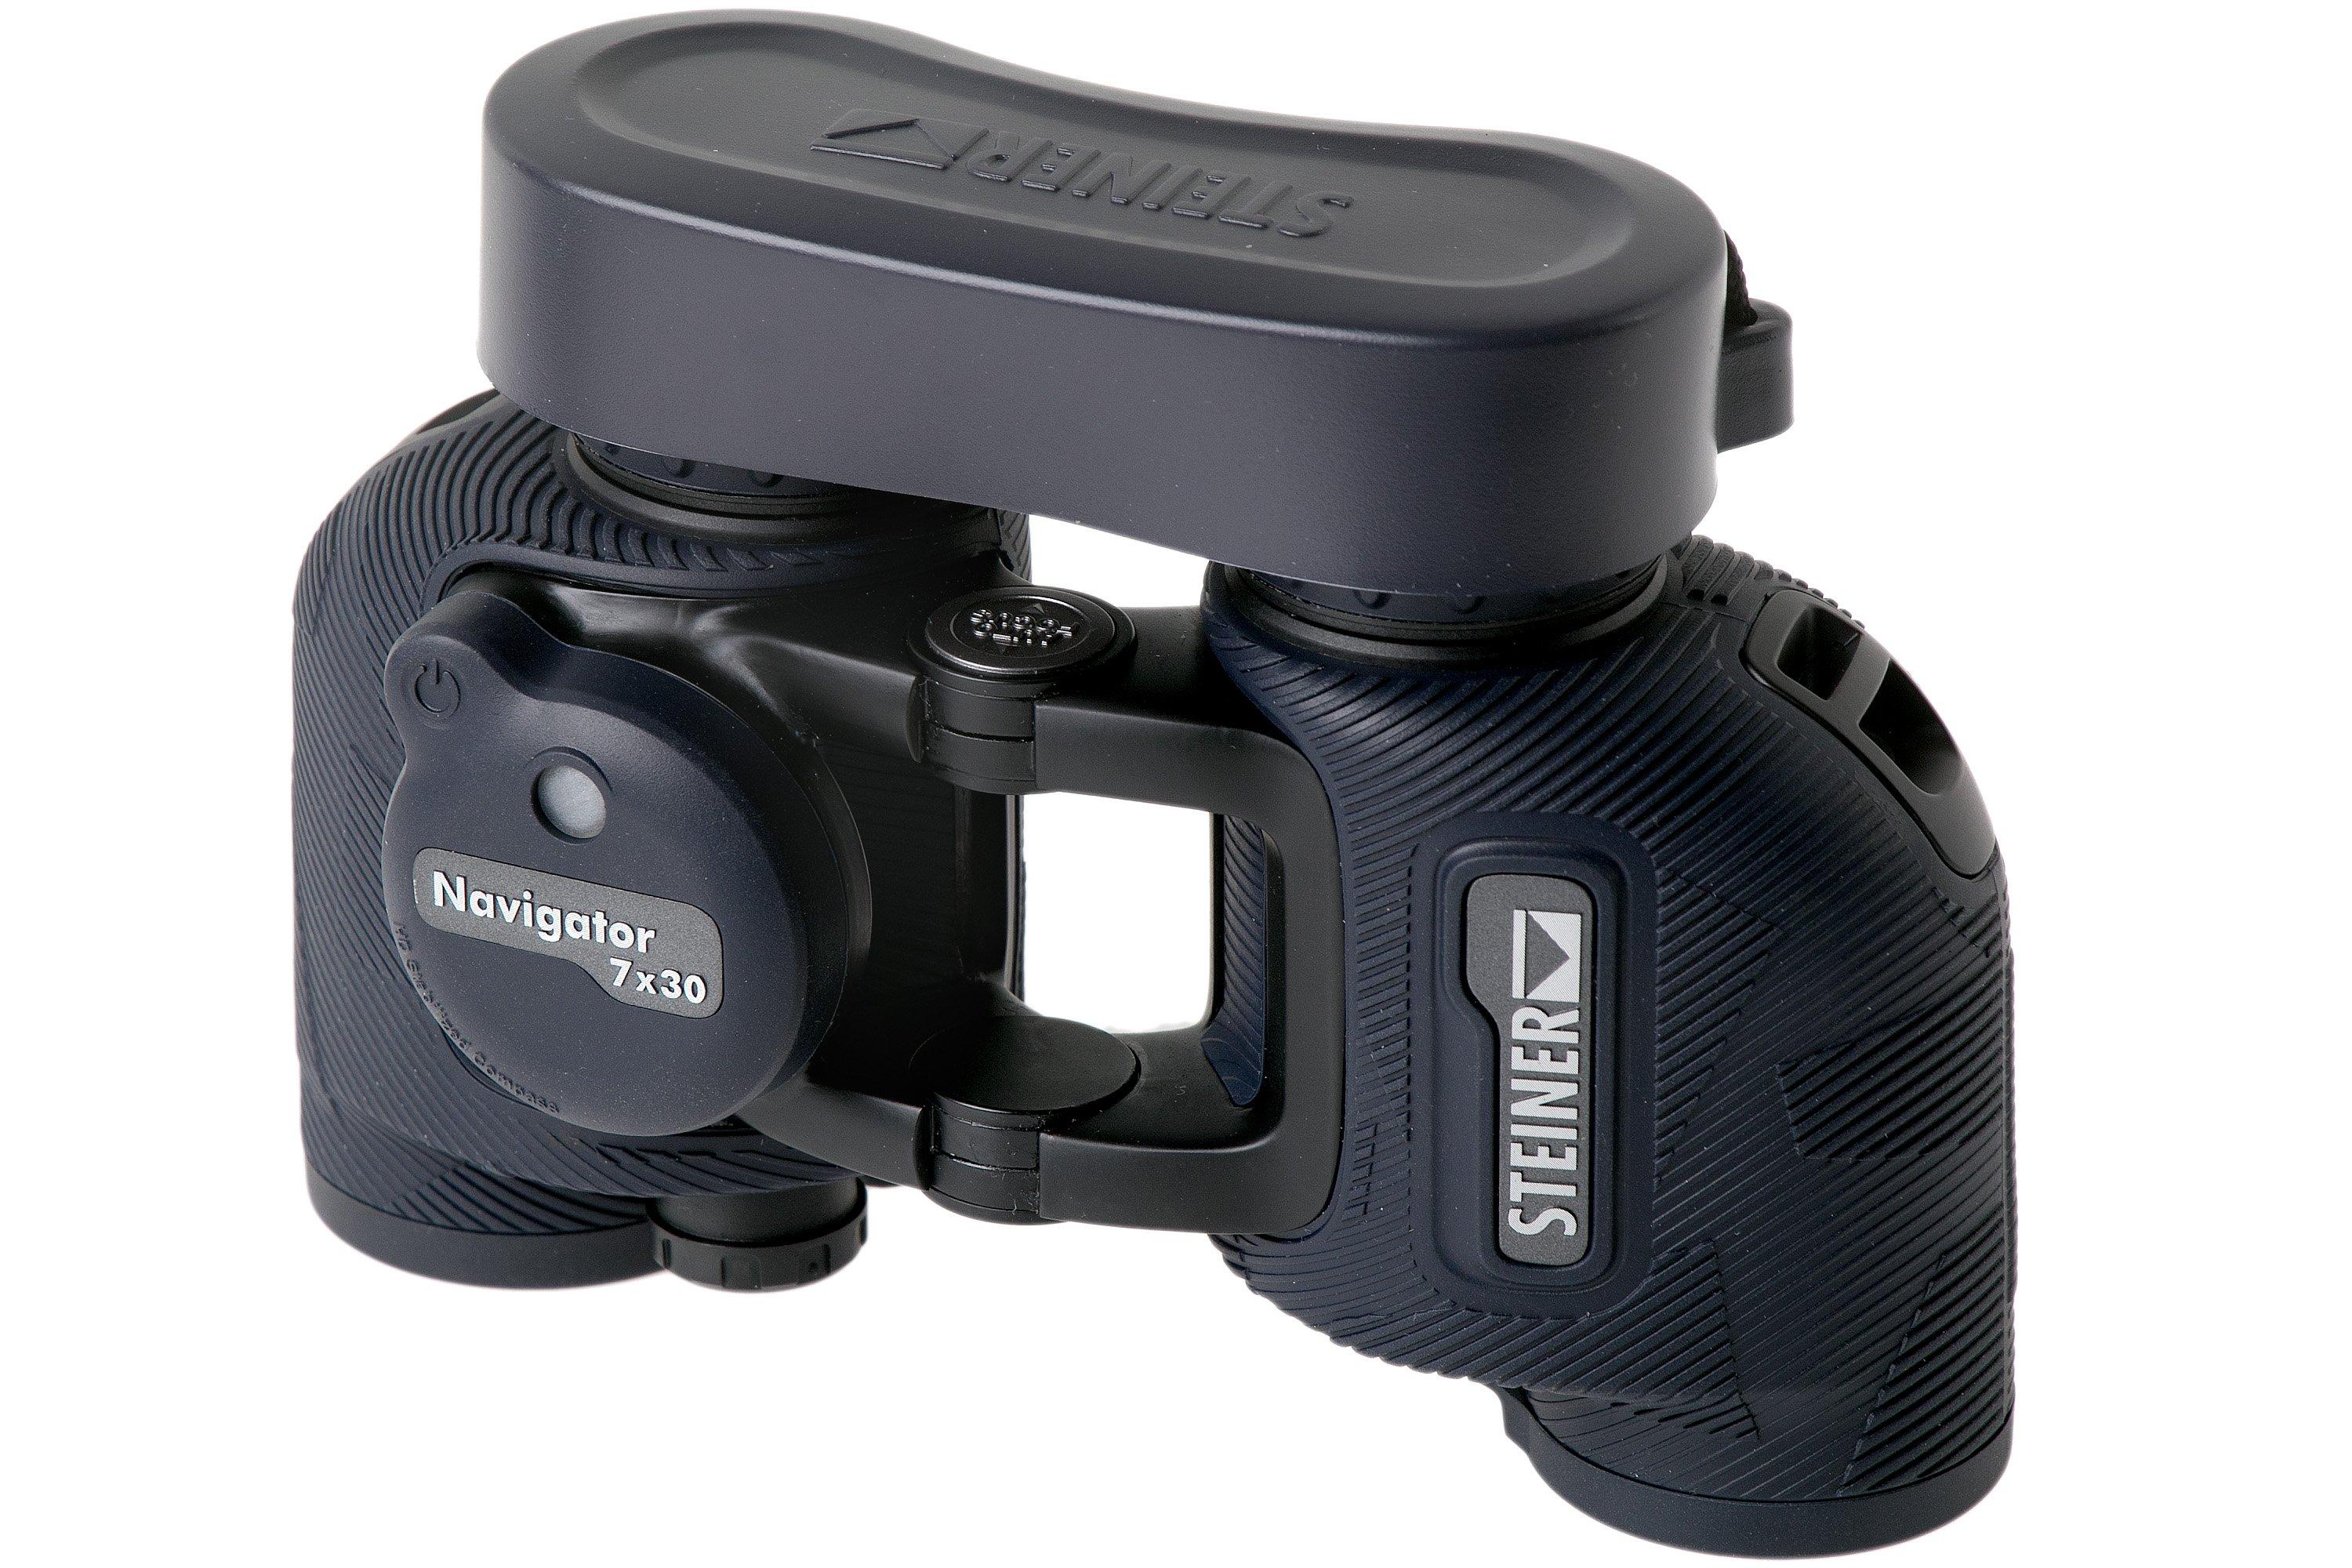 Steiner Navigator Pro 7x30, binoculars with compass | Advantageously ...